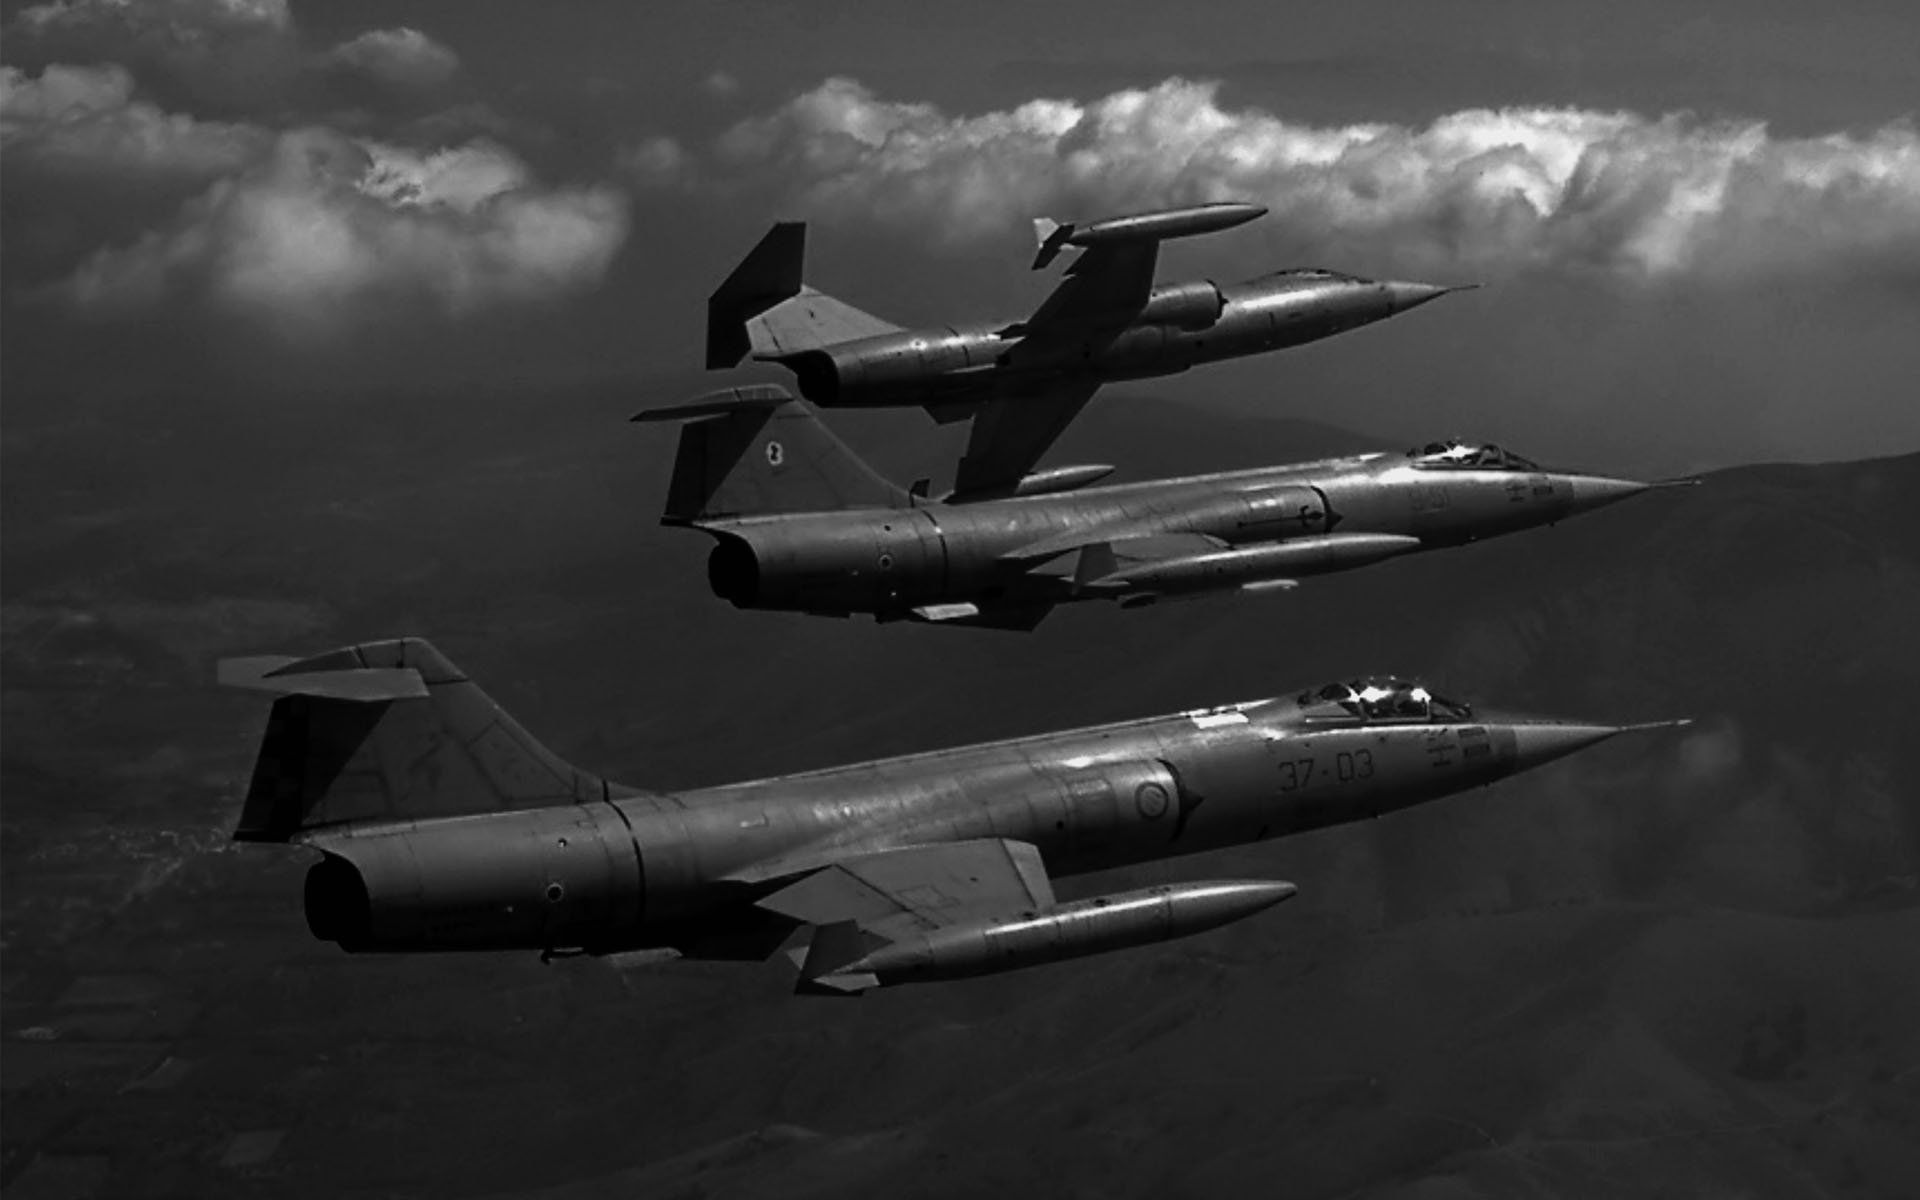 Lockheed F104 Starfighter Fighter Bomber - HD Wallpapers ...